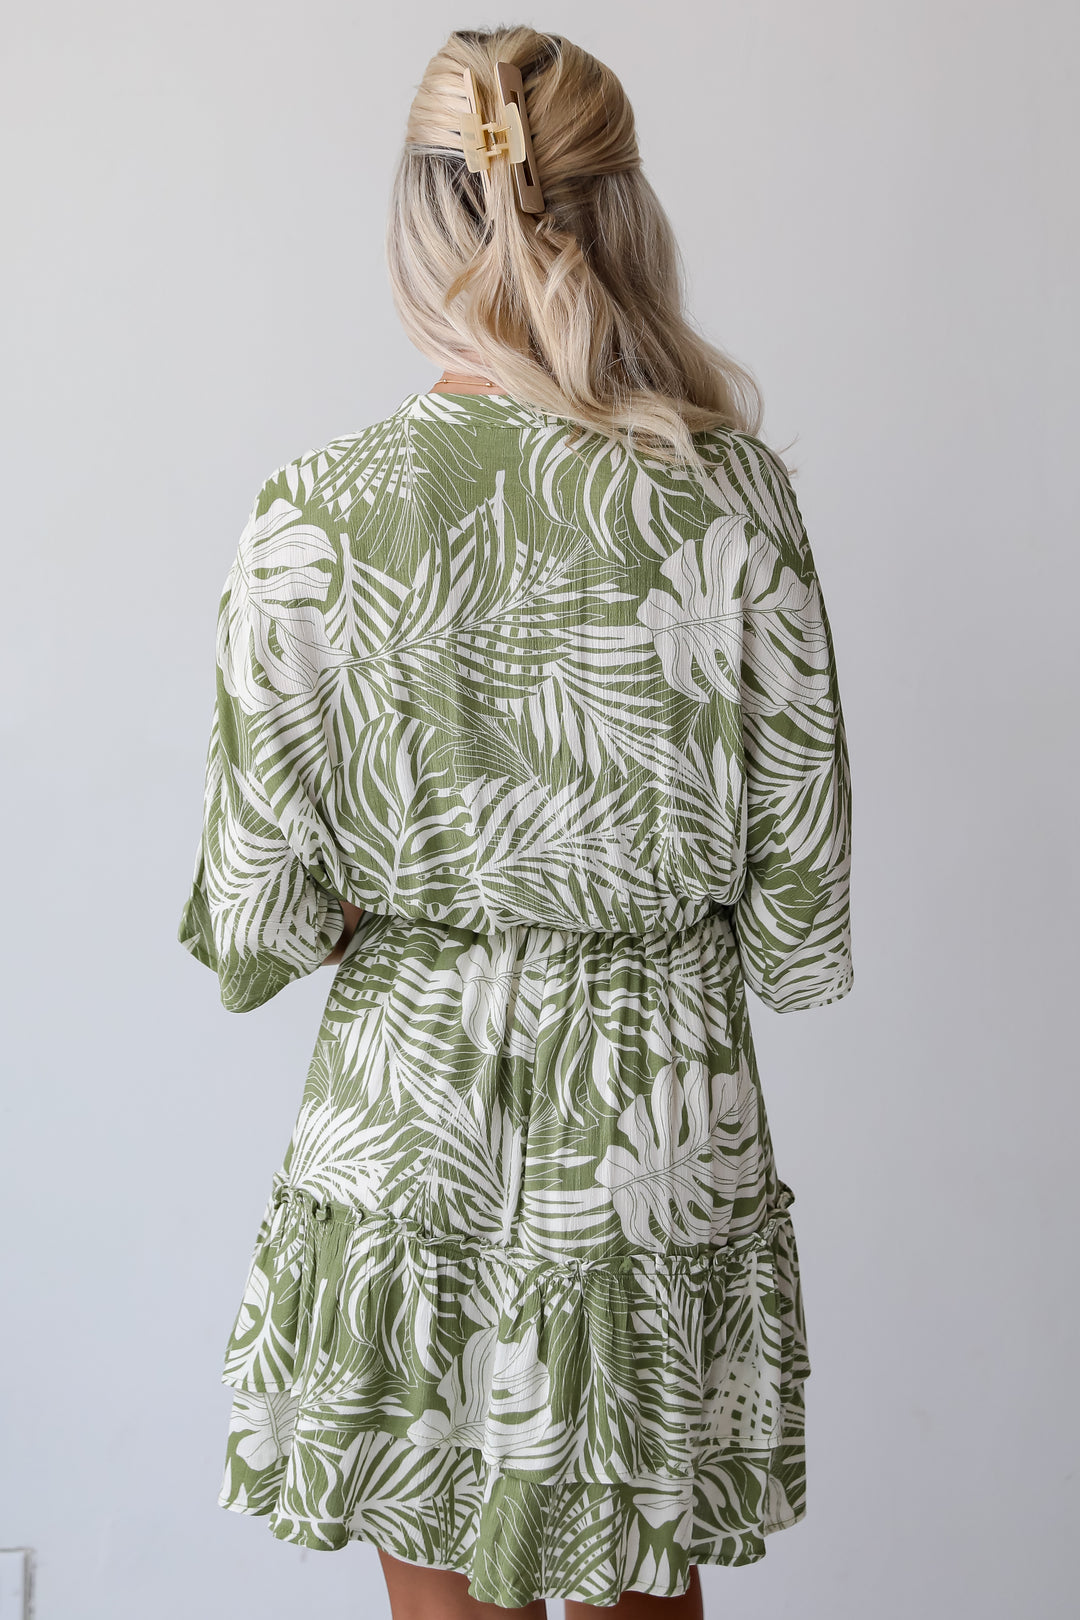 Destined For Sun Green Tropical Mini Dress